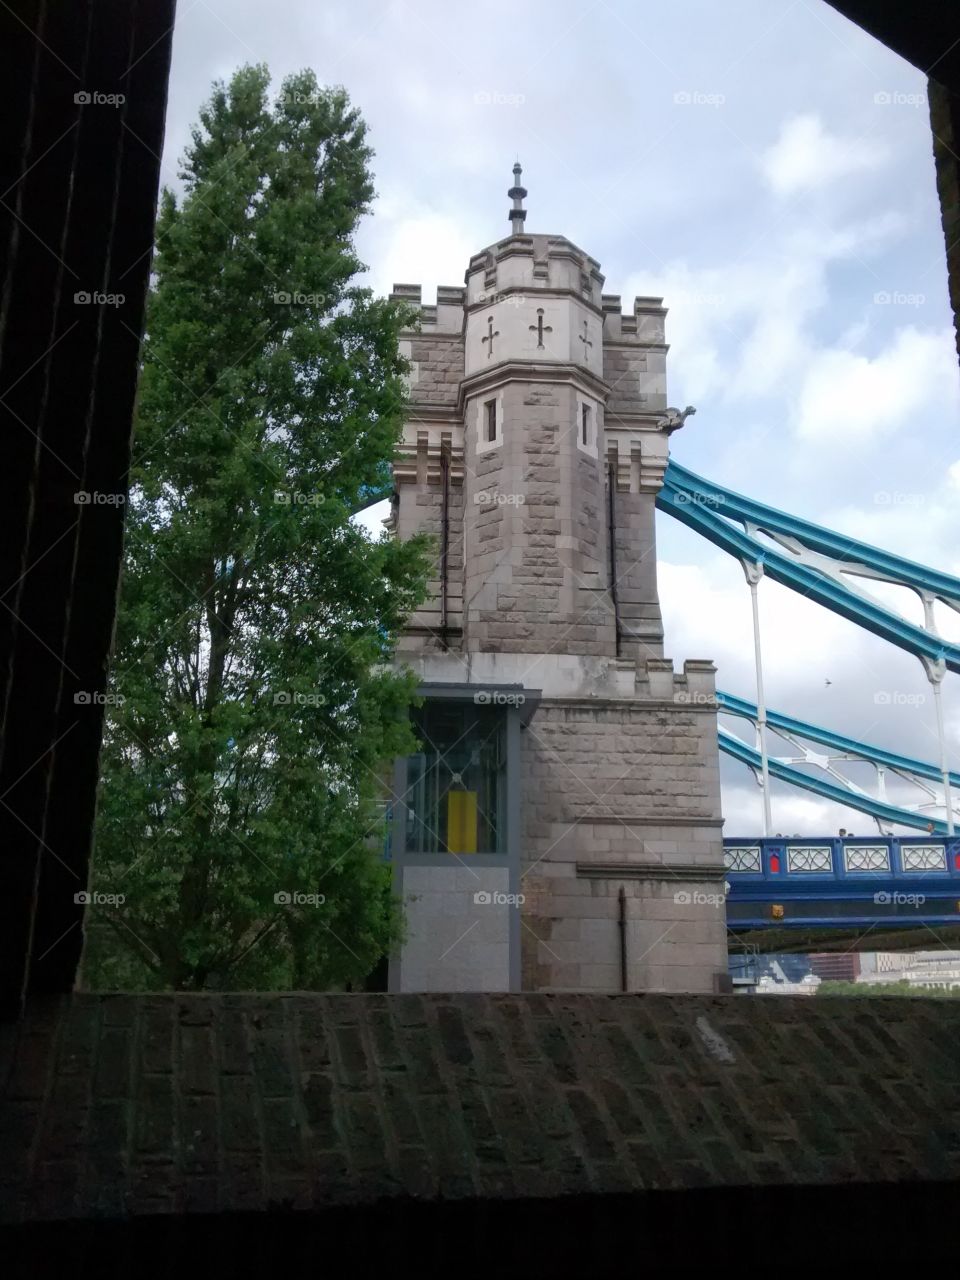 One of Tower Bridge's towers